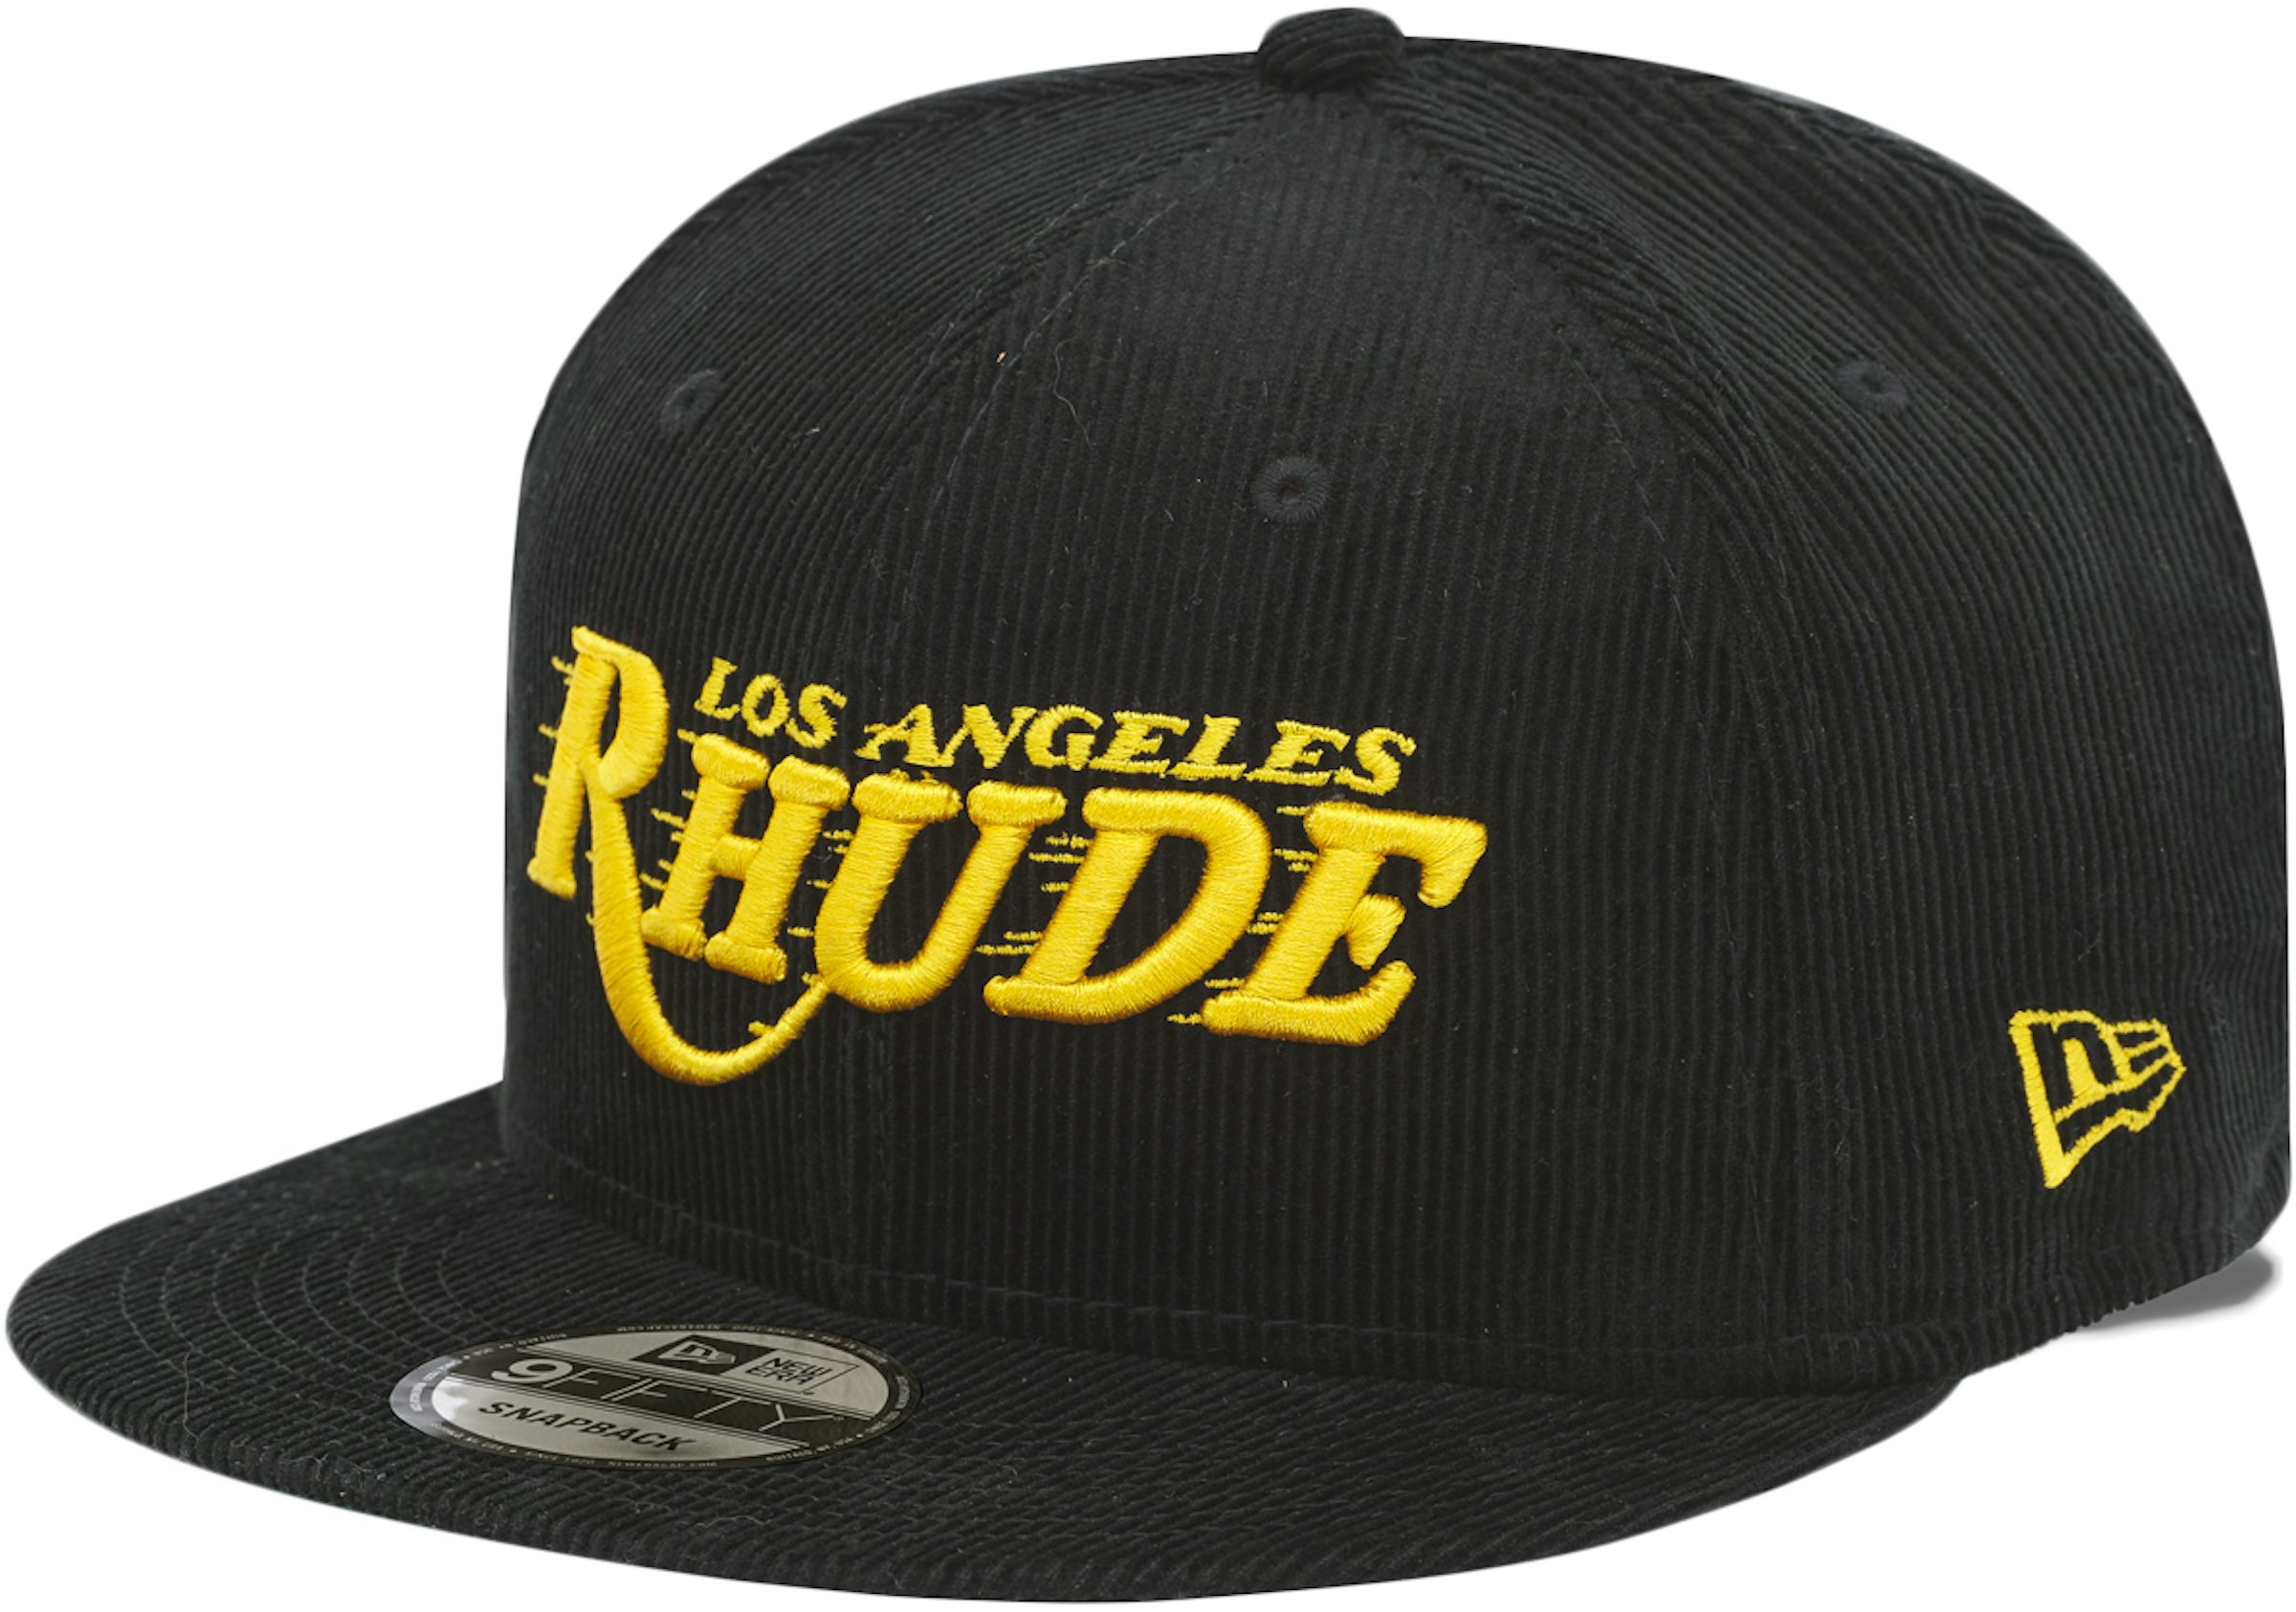 Rhude x Los Angeles Lakers New Era Dreamers Hat Black/Gold Men's - FW20 - US